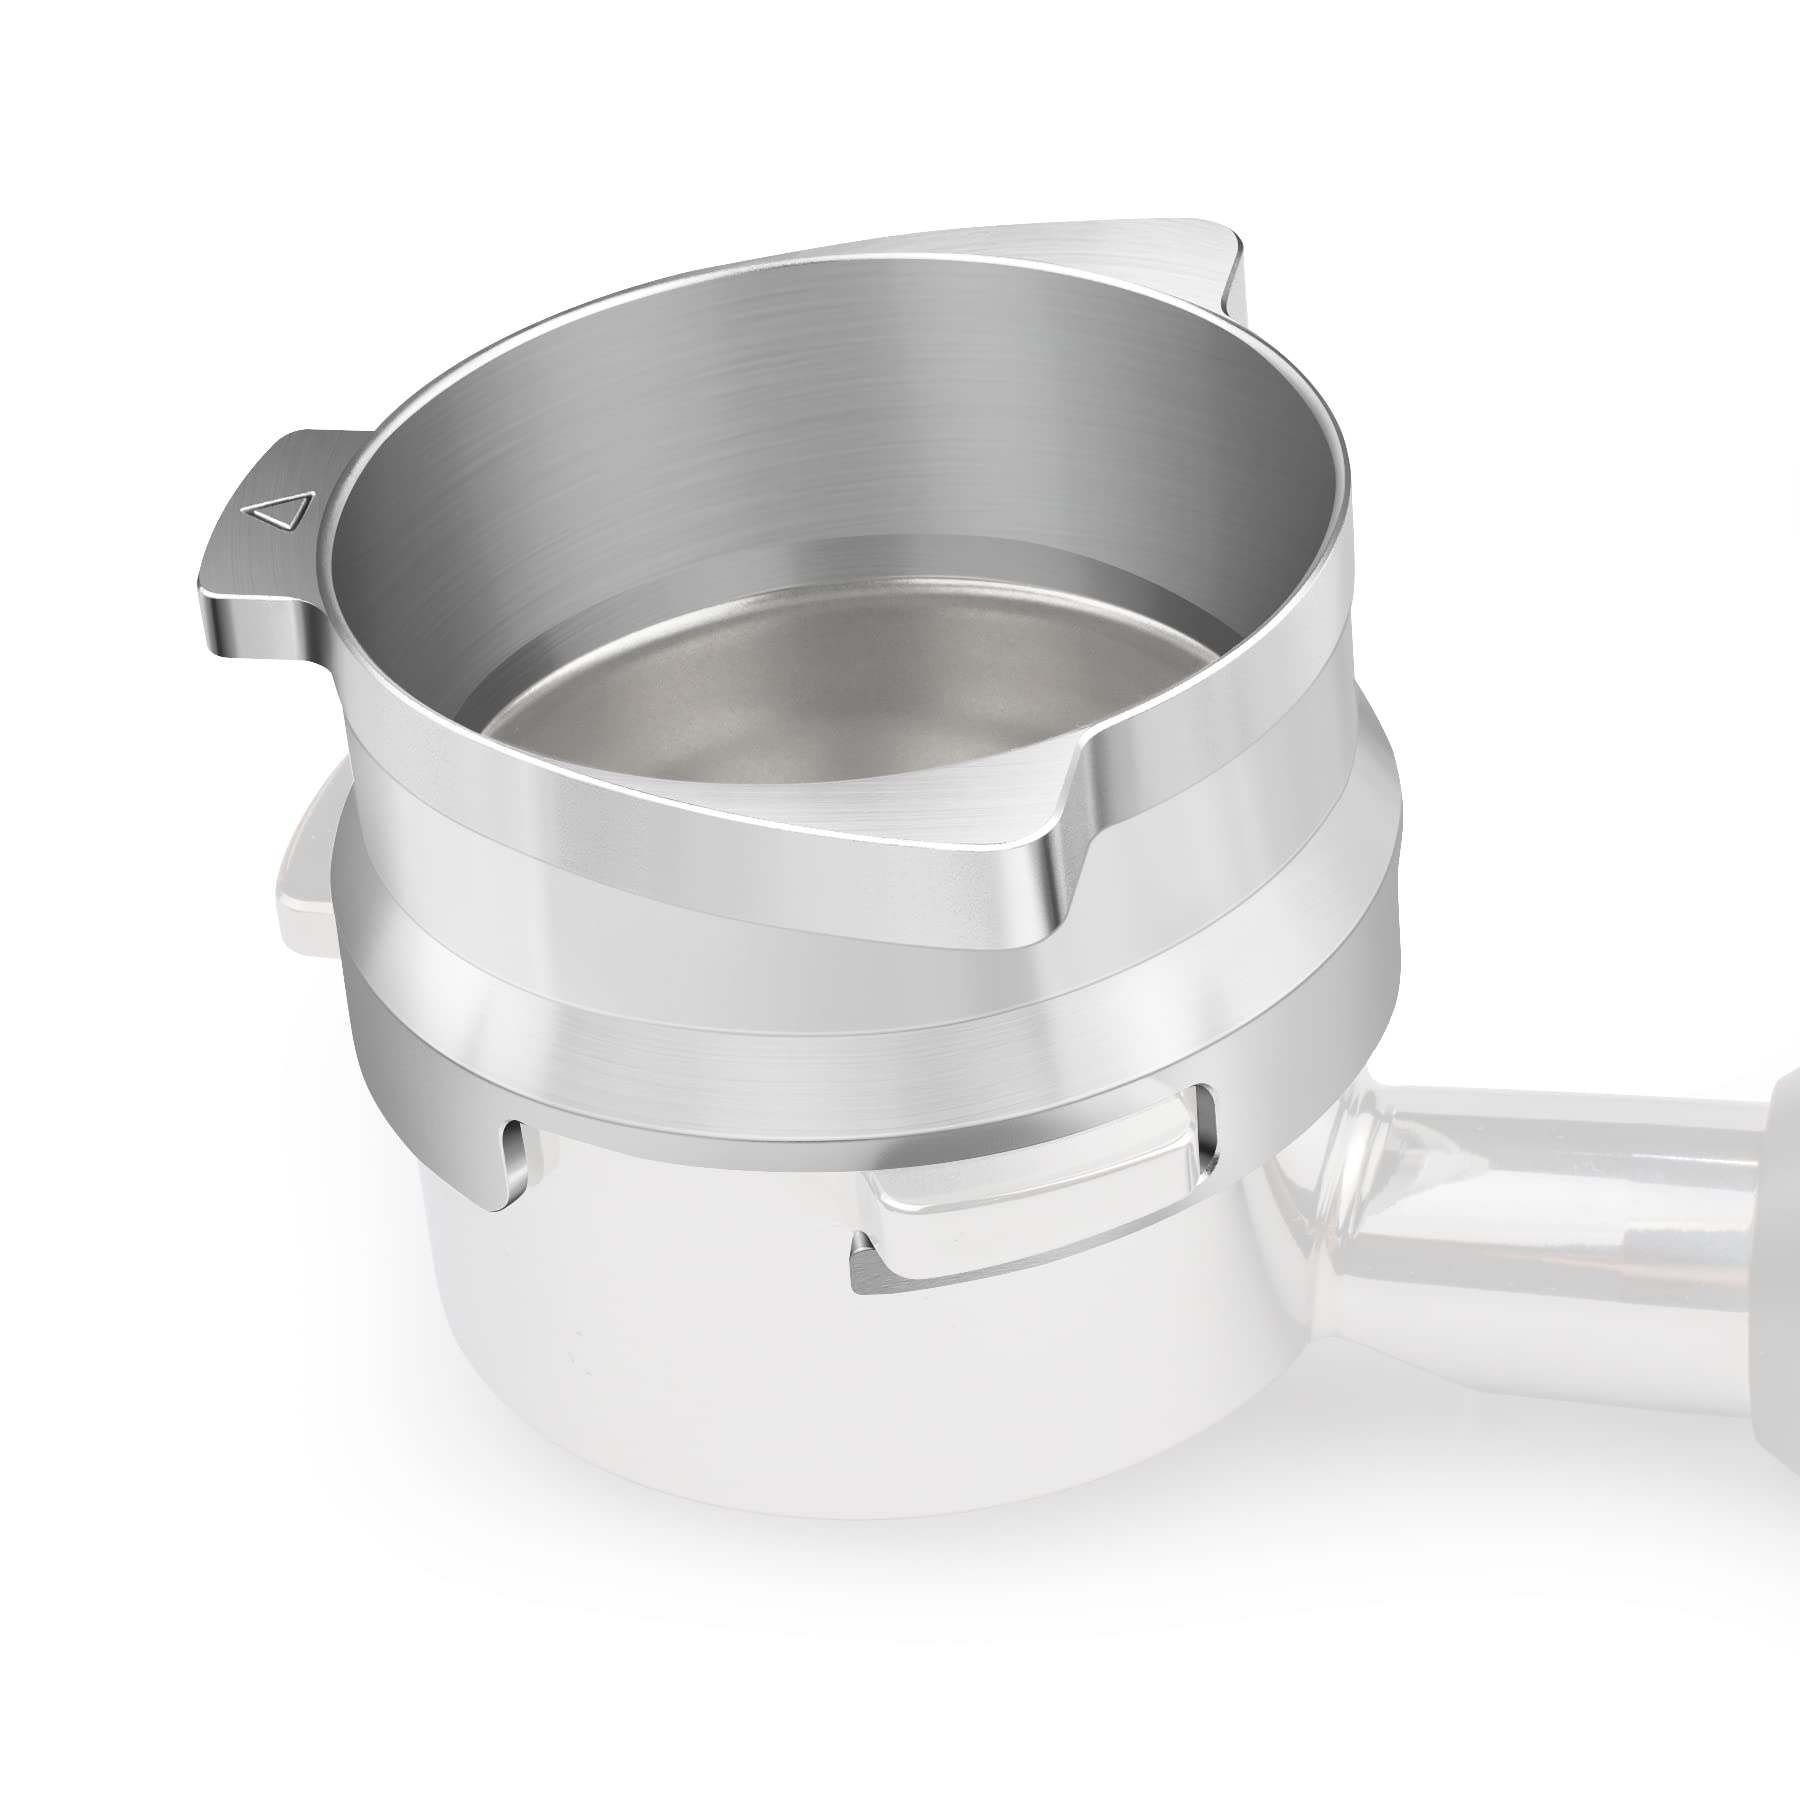 FIRJOY 54mm Espresso Dosing Funnel for Breville Barista Portafilters (Stainless Steel-Silver)